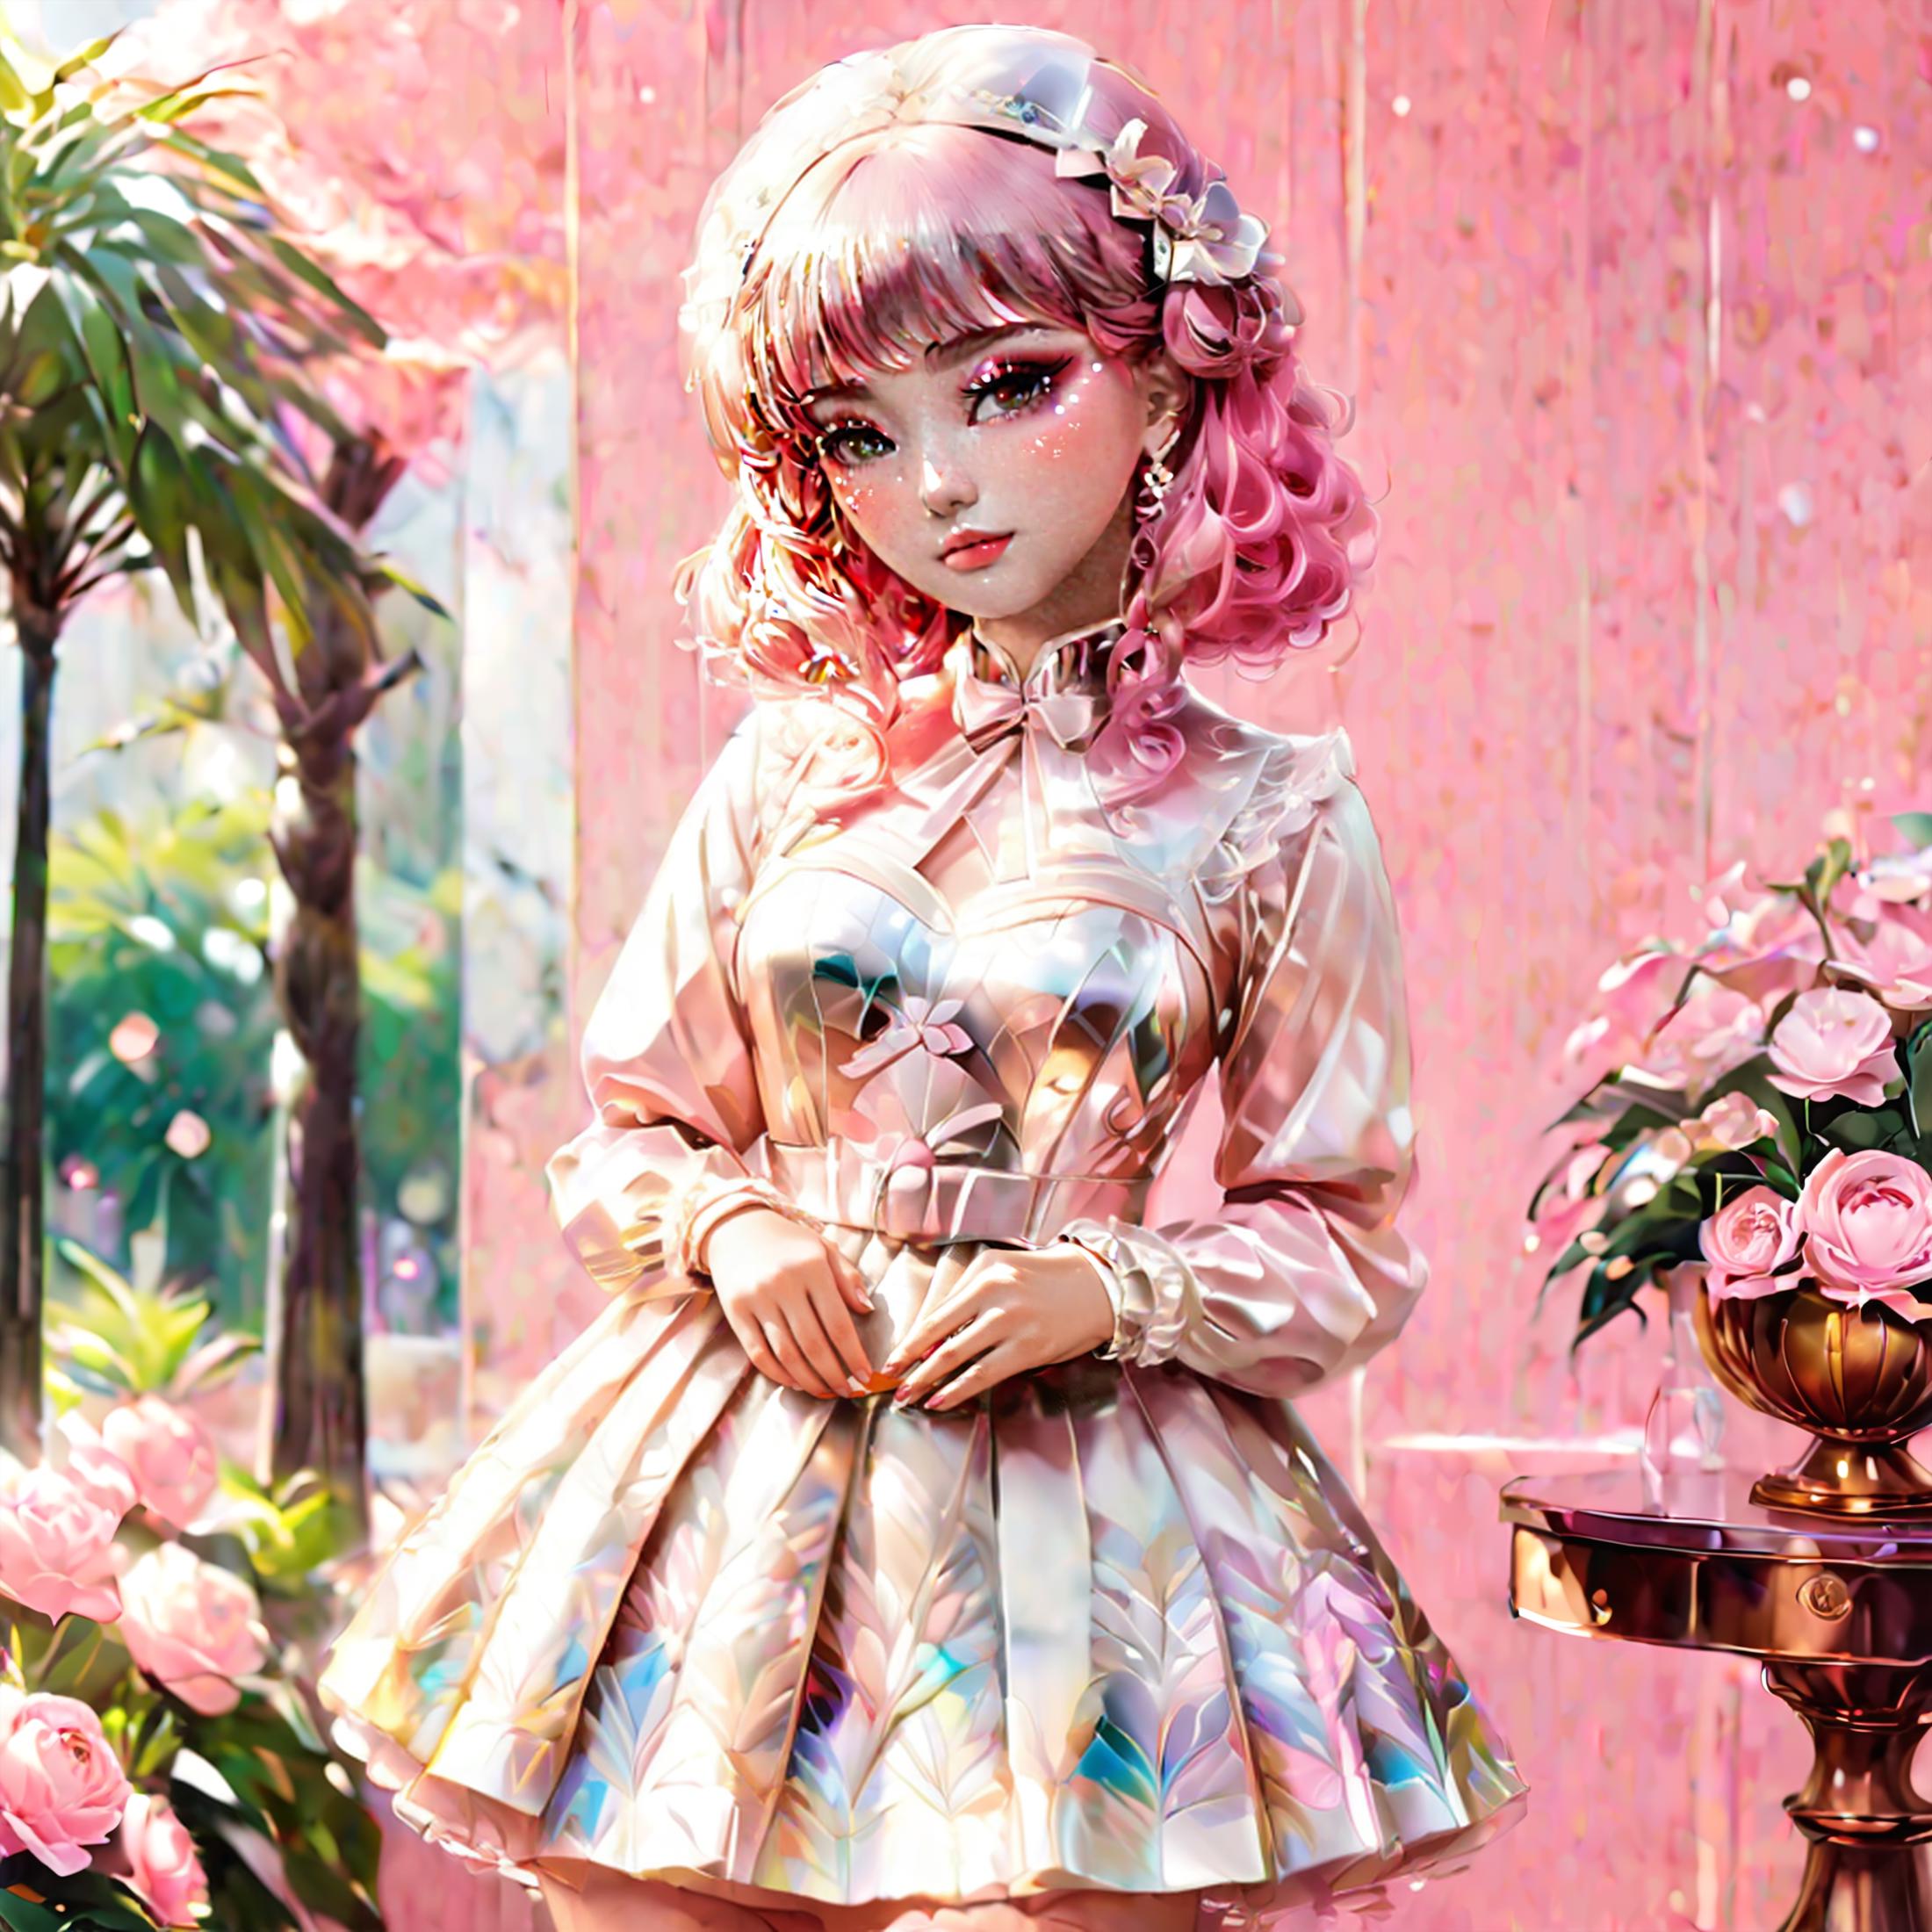 Sweet Lolita XL image by MysticDaedra